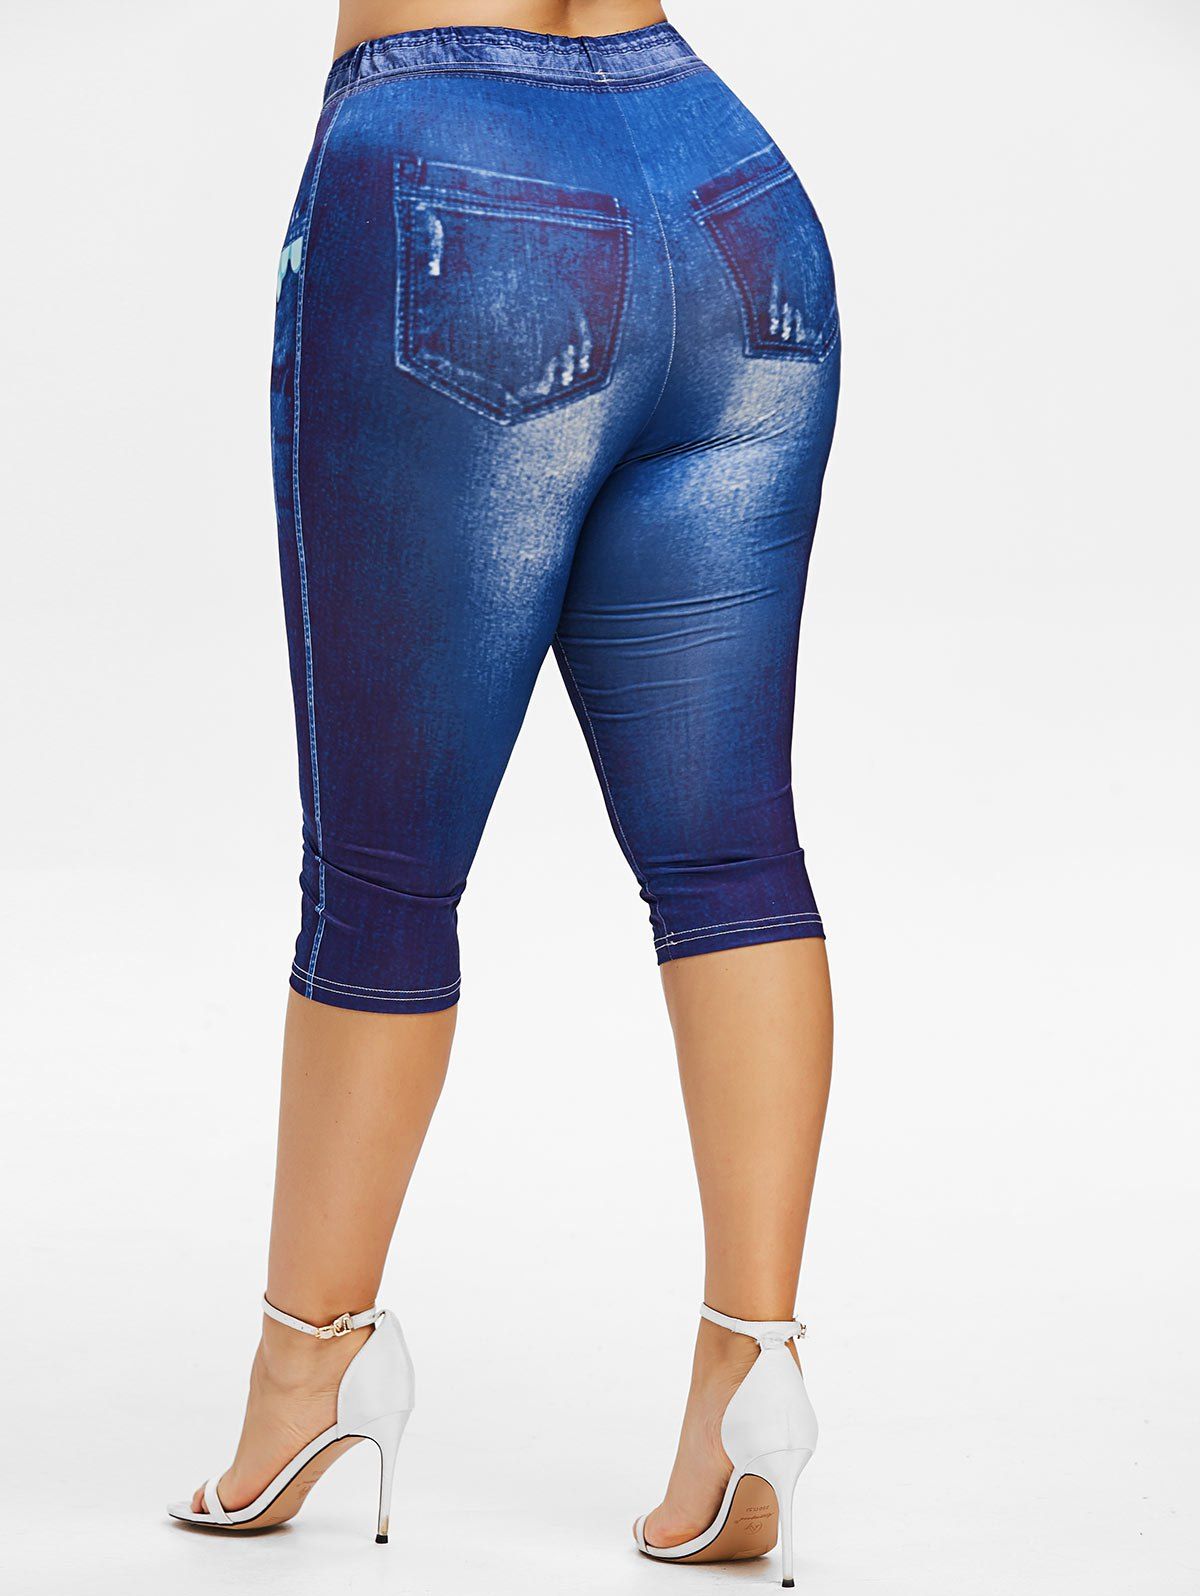 Women's Fake Denim Capris Lace Hem Floral Cropped Jeans Skinny Capri  Leggings Plus Size Stretch Tights Short Pants at  Women's Clothing  store